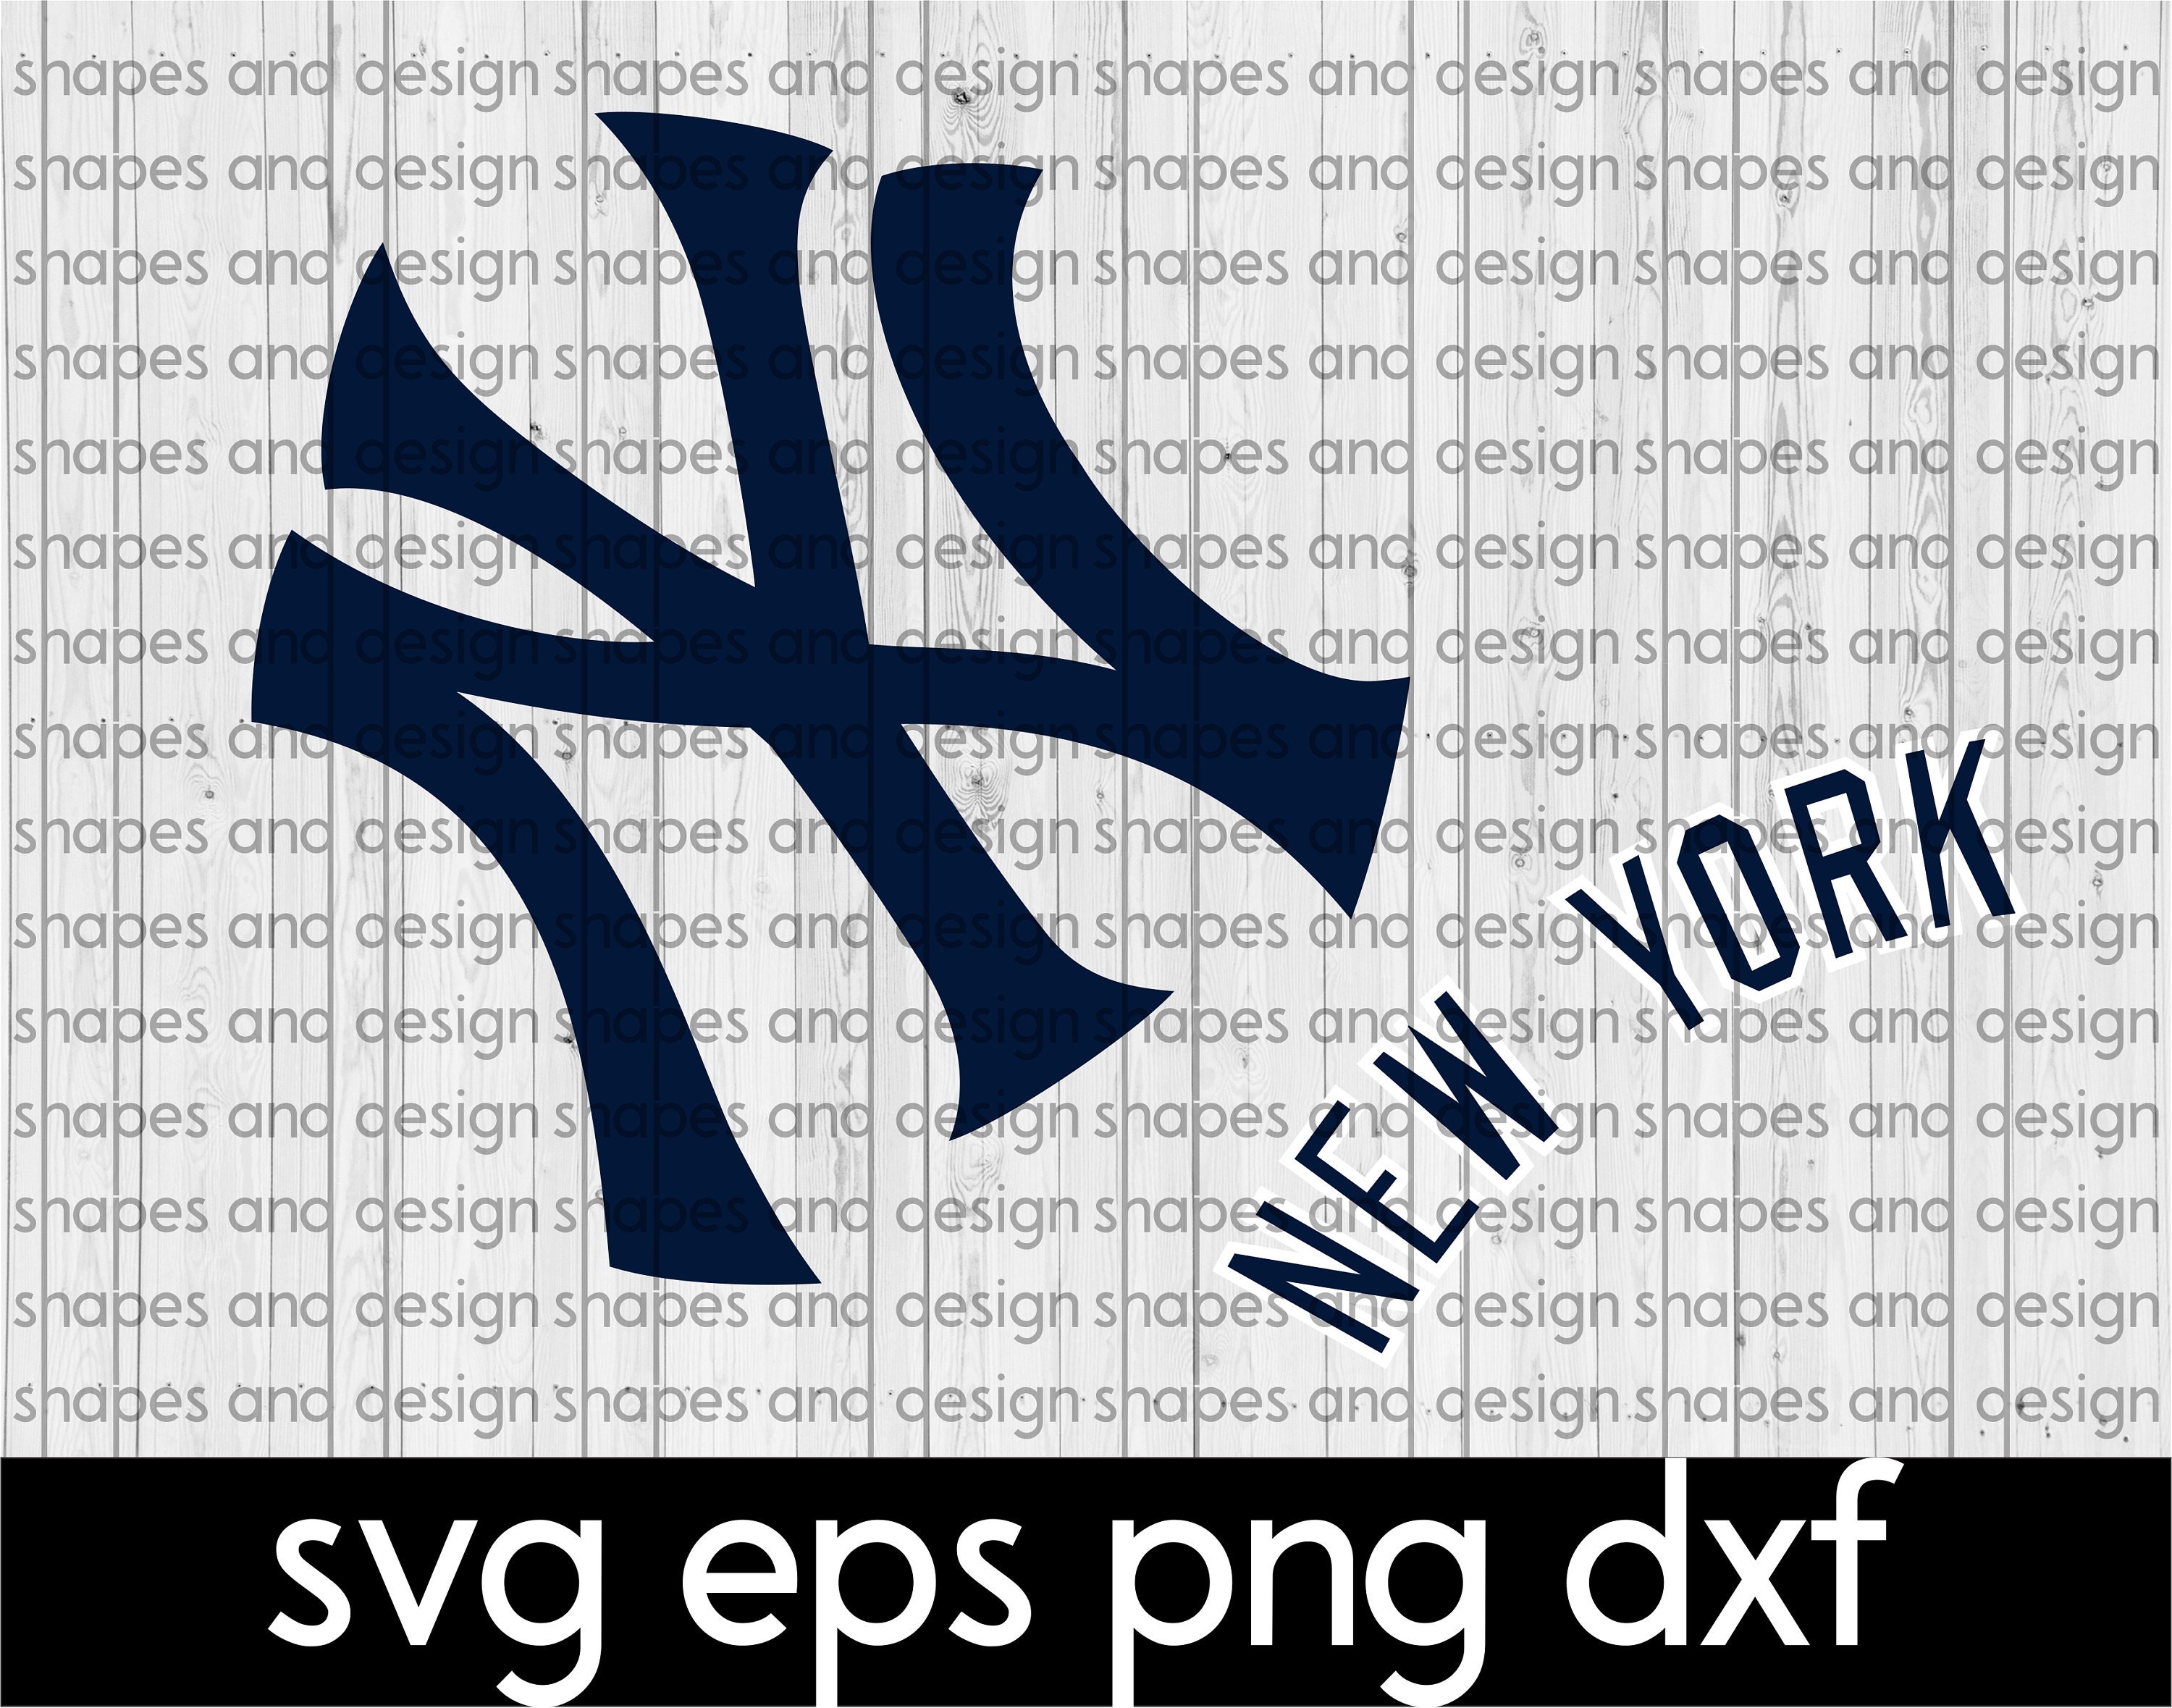 New York Yankees Svg, NY Svg. Vector Cut file Cricut, Silhouette, Pdf Png,  Dxf, Decal, Sticker, Stencil, Vinyl. - MasterBundles